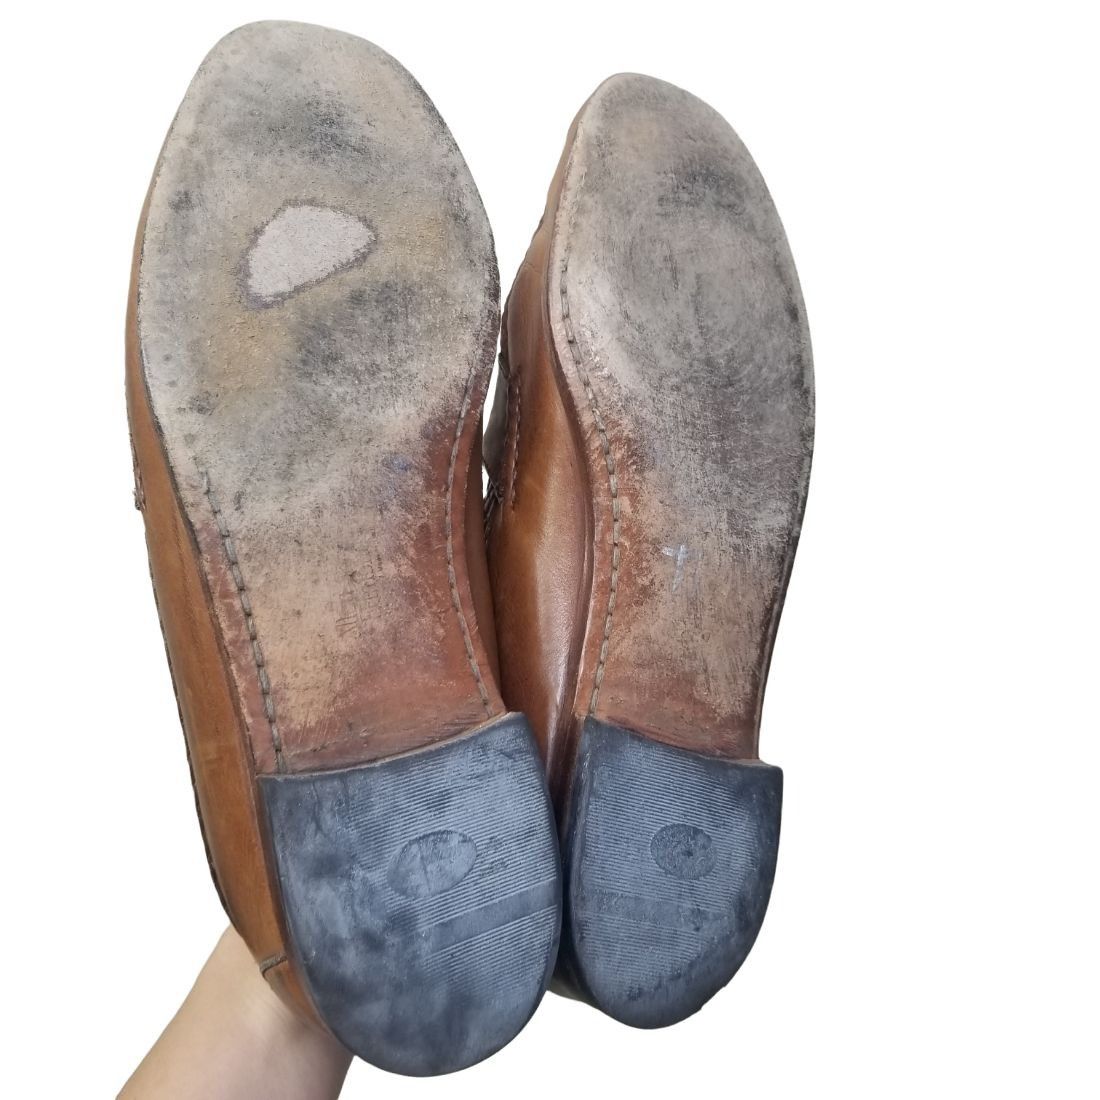 Allen Edmonds Allen Edmonds Leather Closed Toe Slip On Maxfield Loafers Size US 12 / EU 45 - 11 Preview